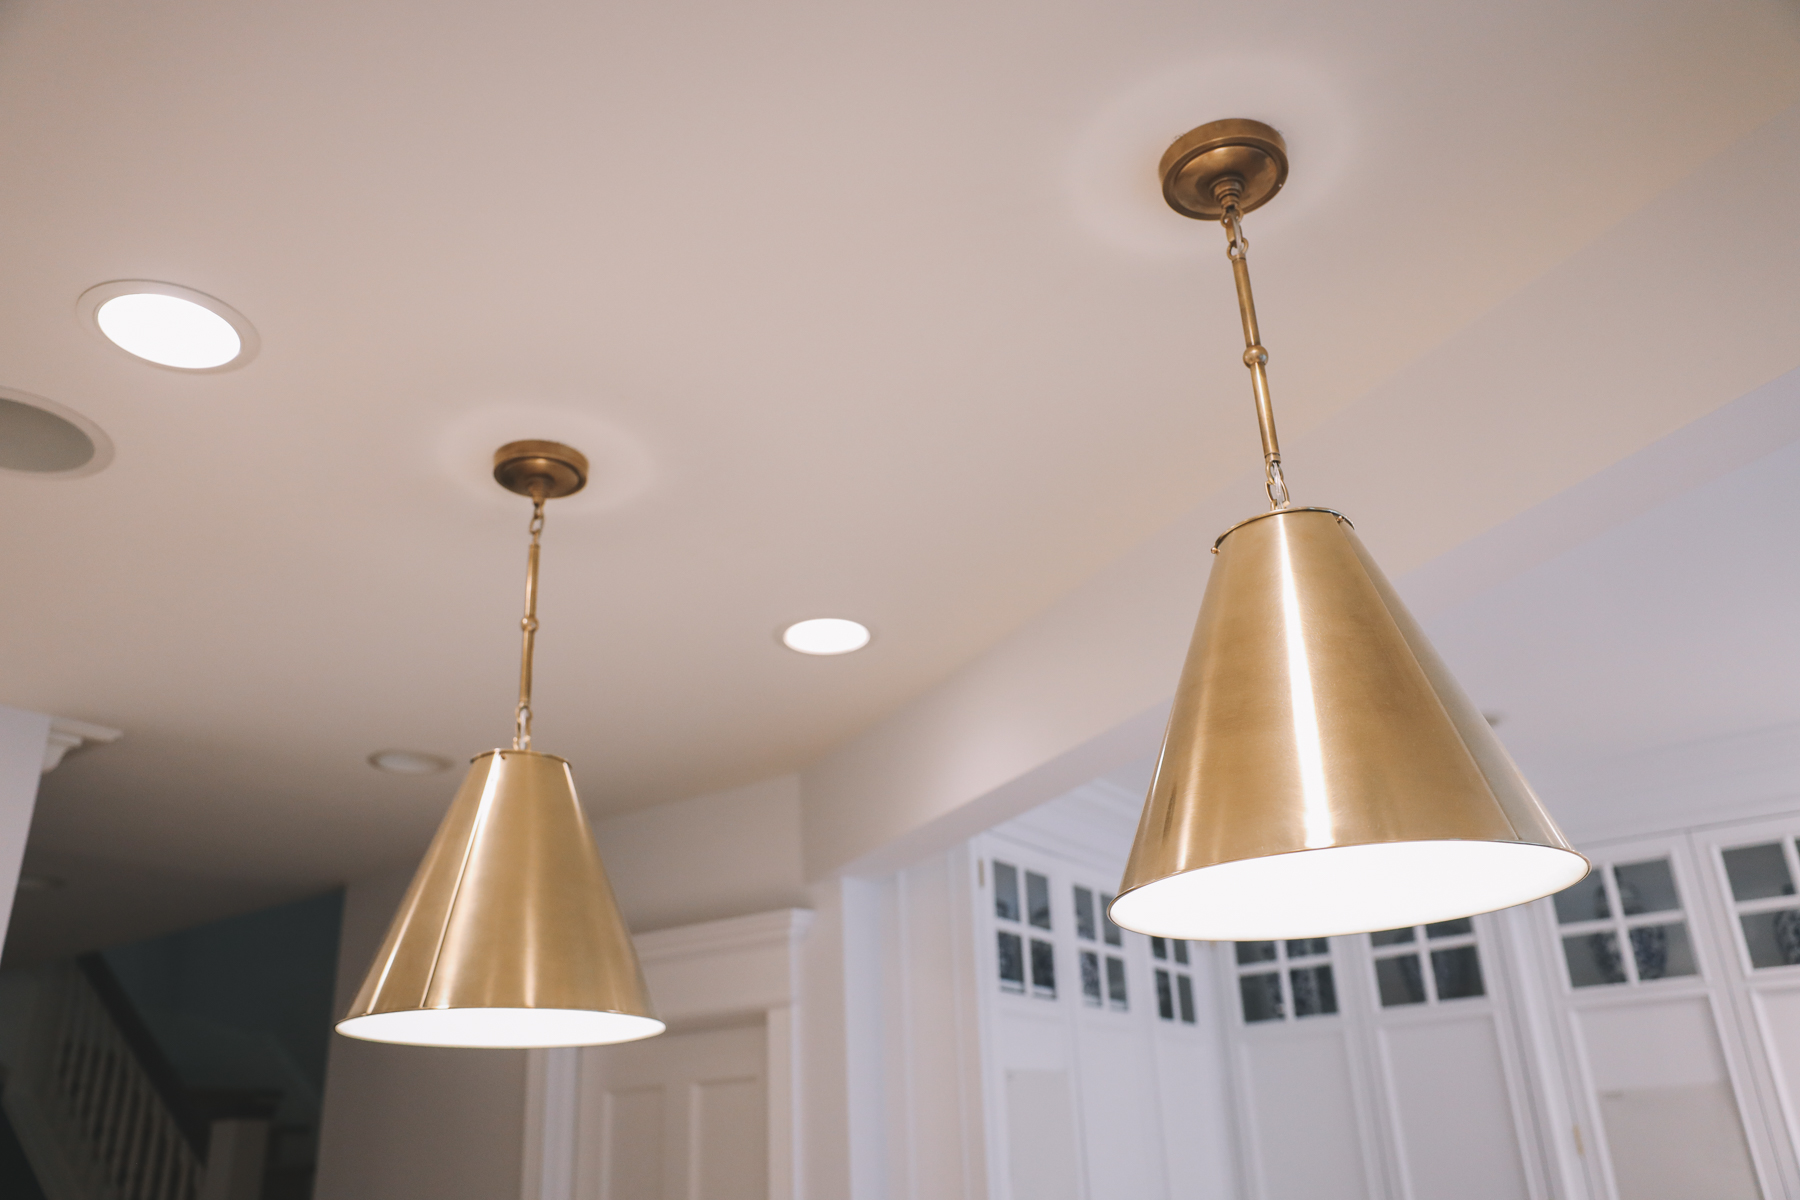 Kasa Smart Lighting System | Mitchs Smart Home